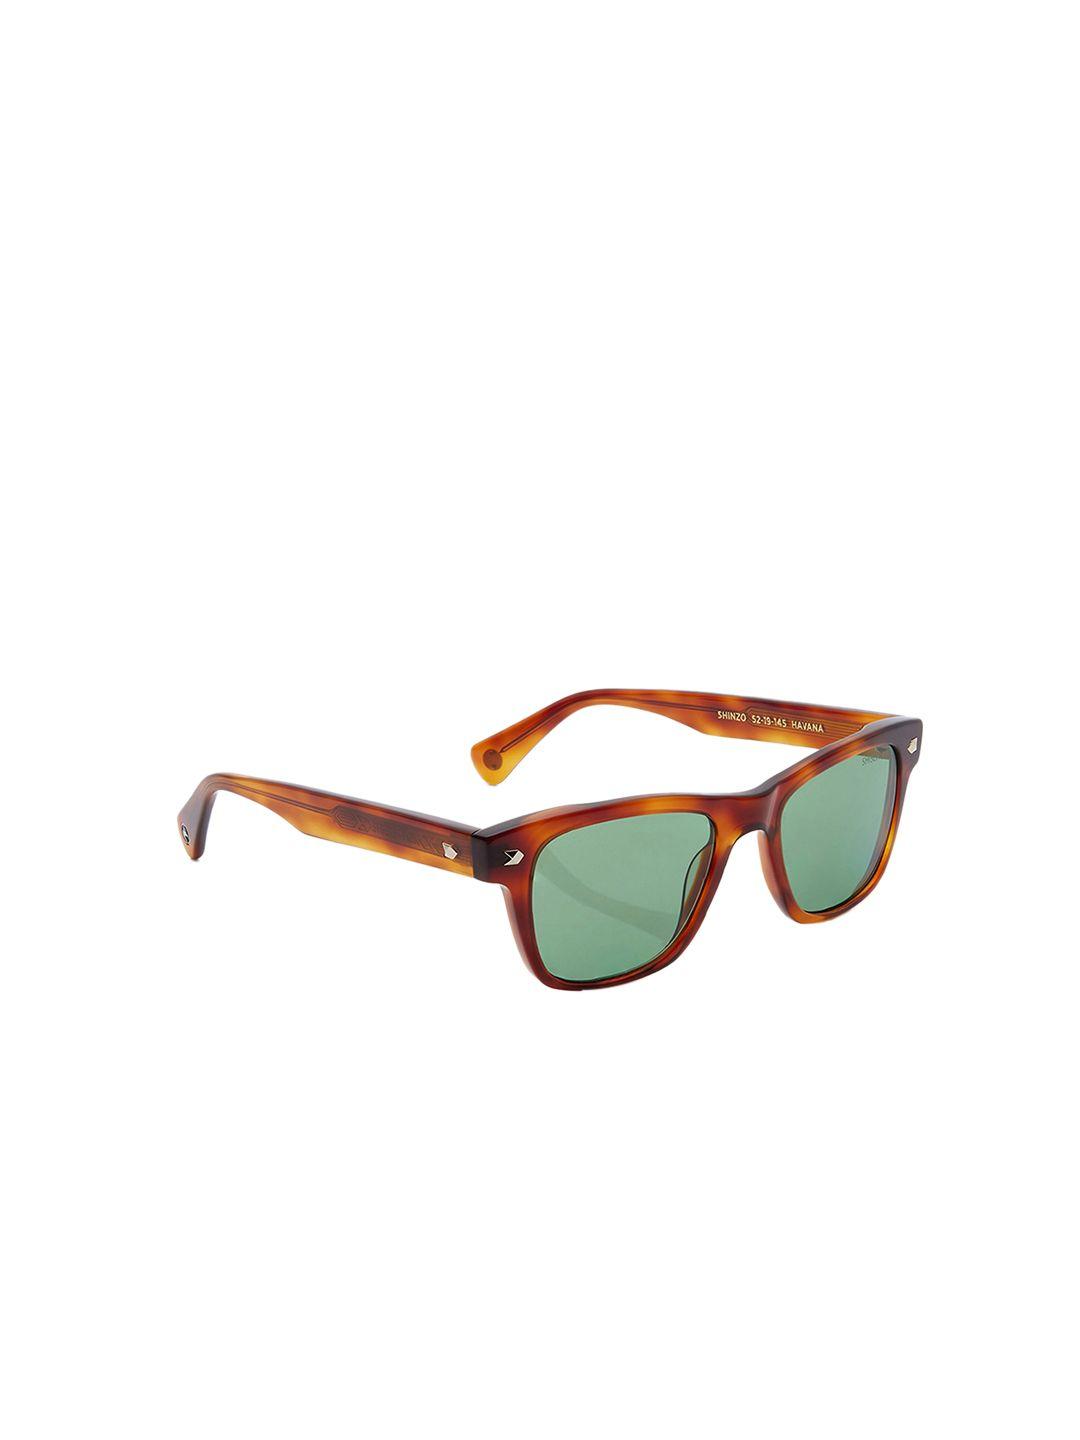 shisen fox shinzo havana unisex square sunglasses with uv protected lens